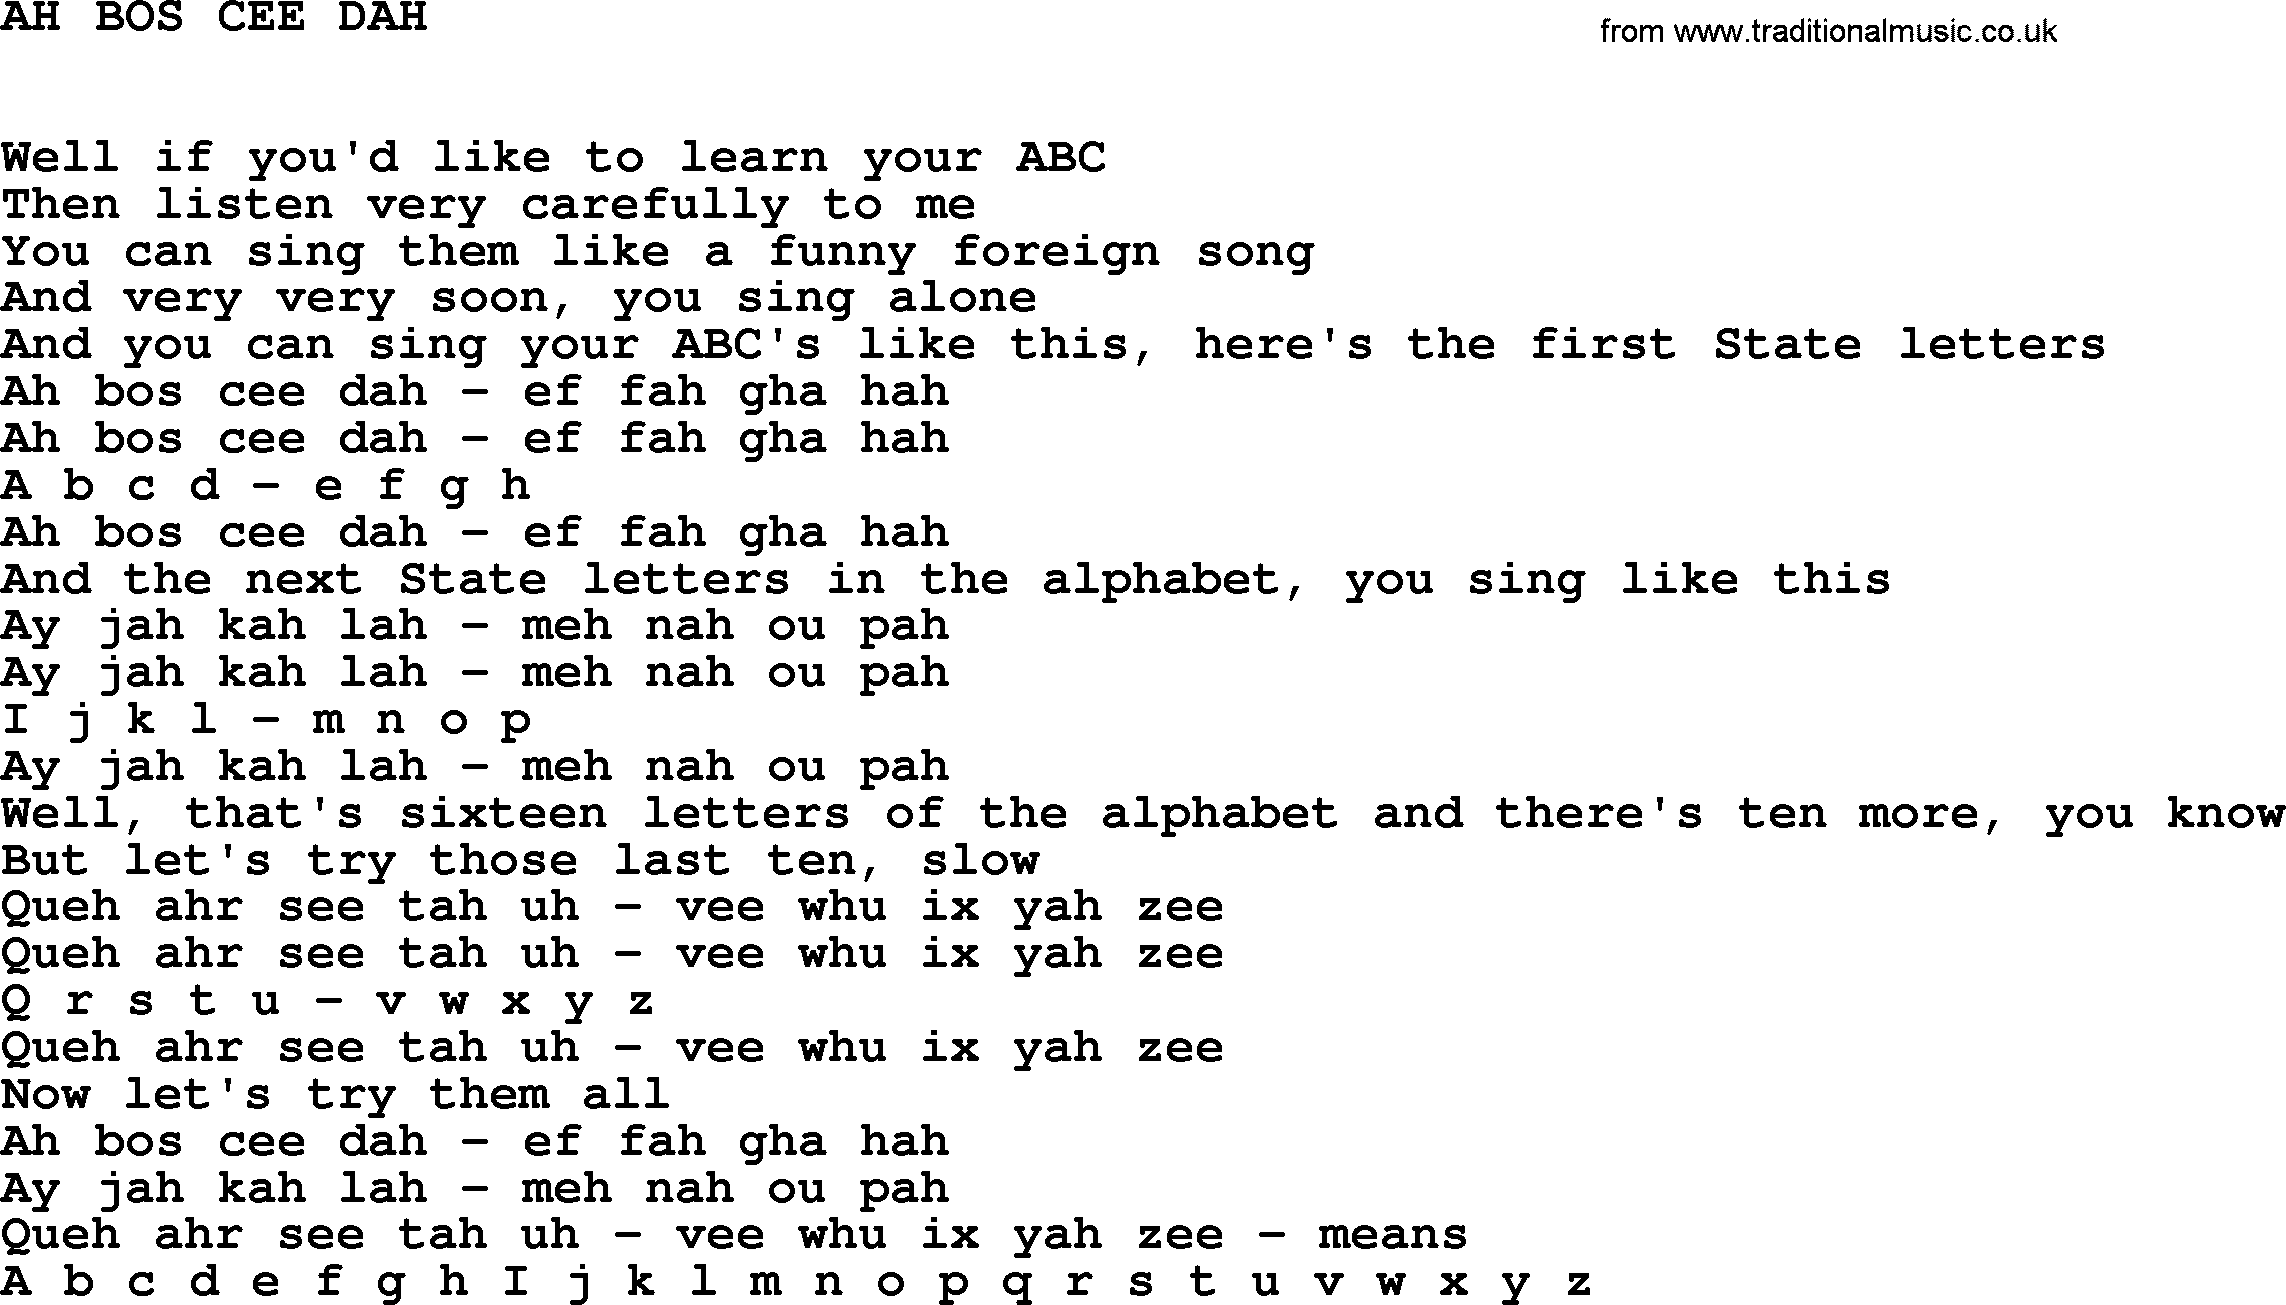 Johnny Cash song Ah Bos Cee Dah.txt lyrics